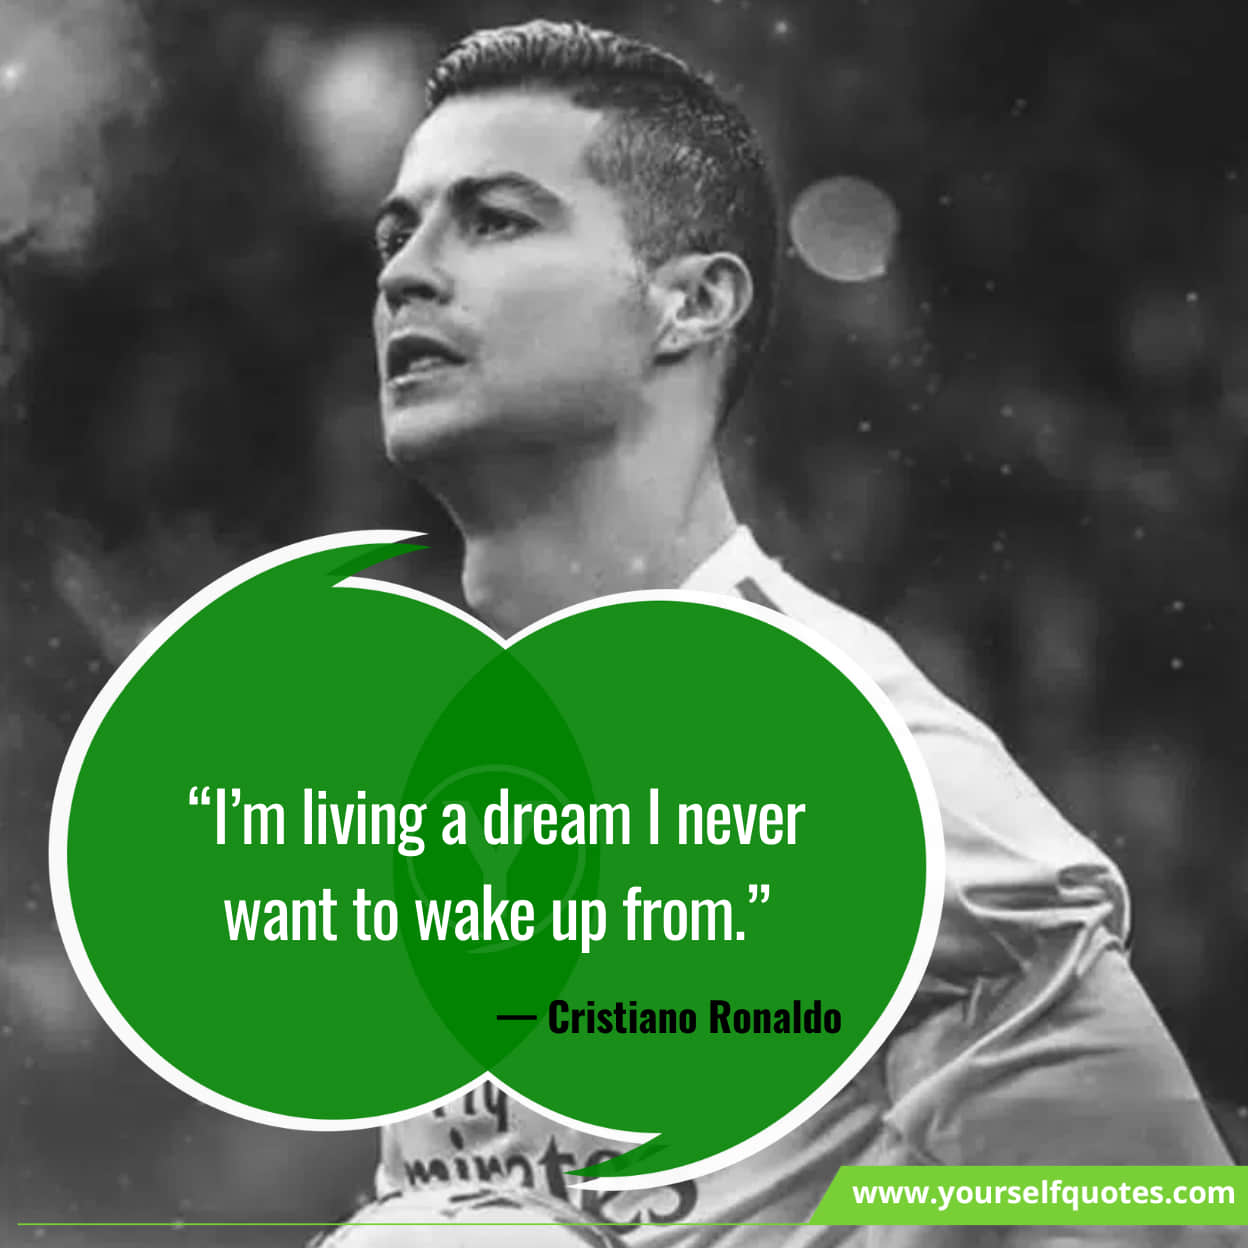 Cristiano Ronaldo Quotes On Life